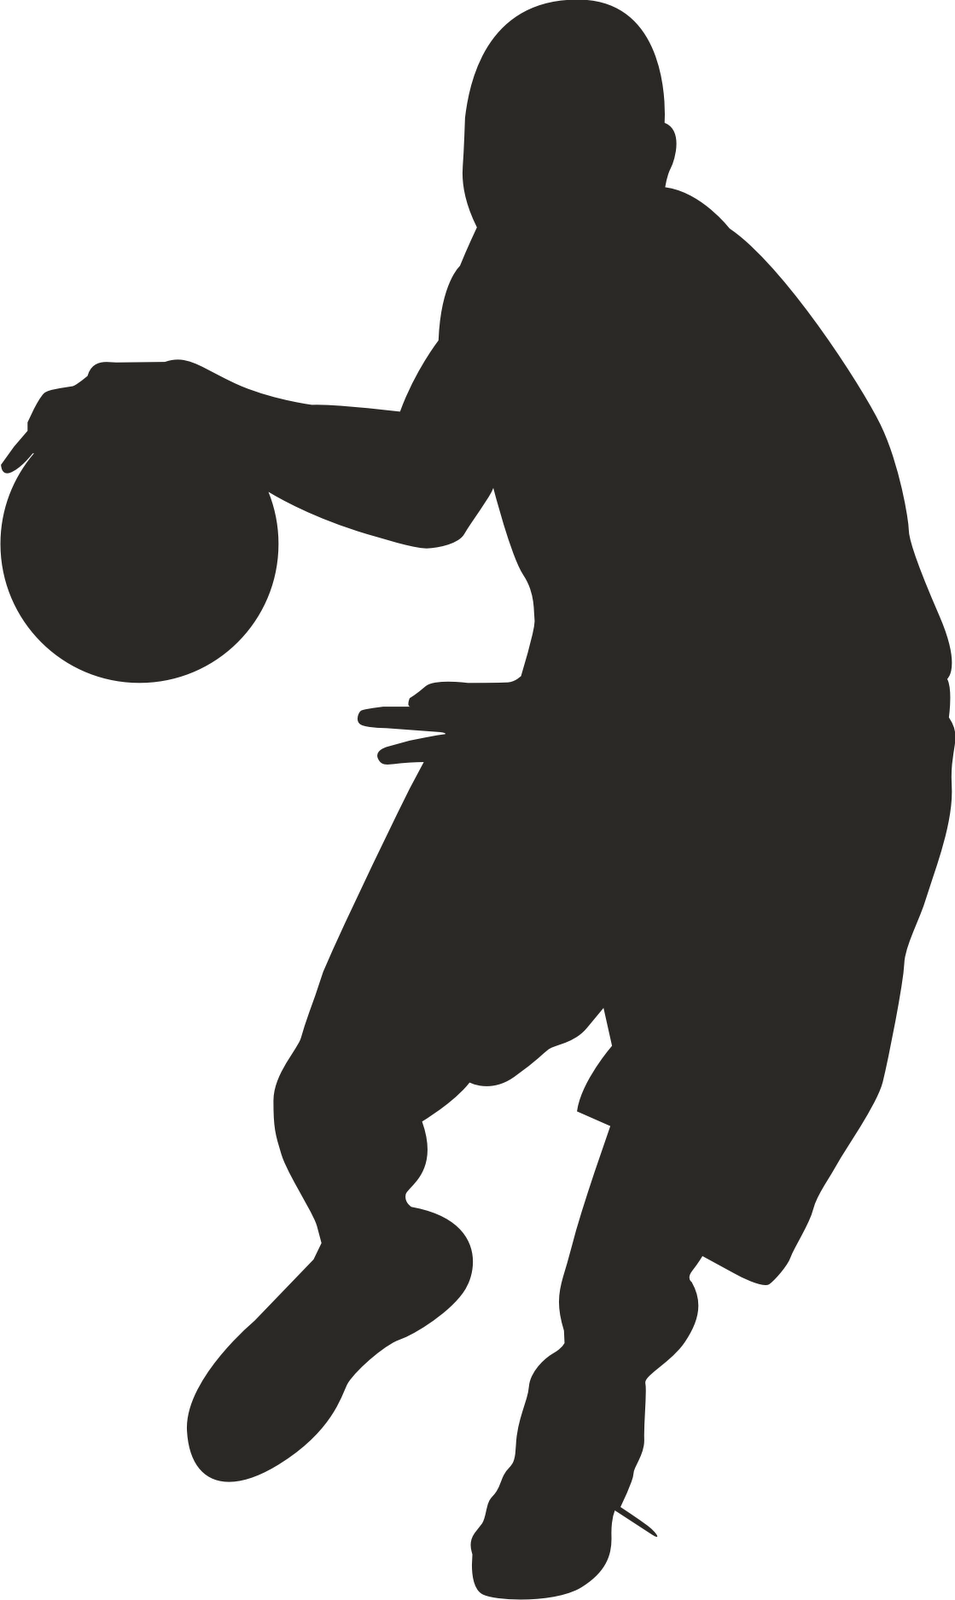 Basket Ball Vector - Clipart library